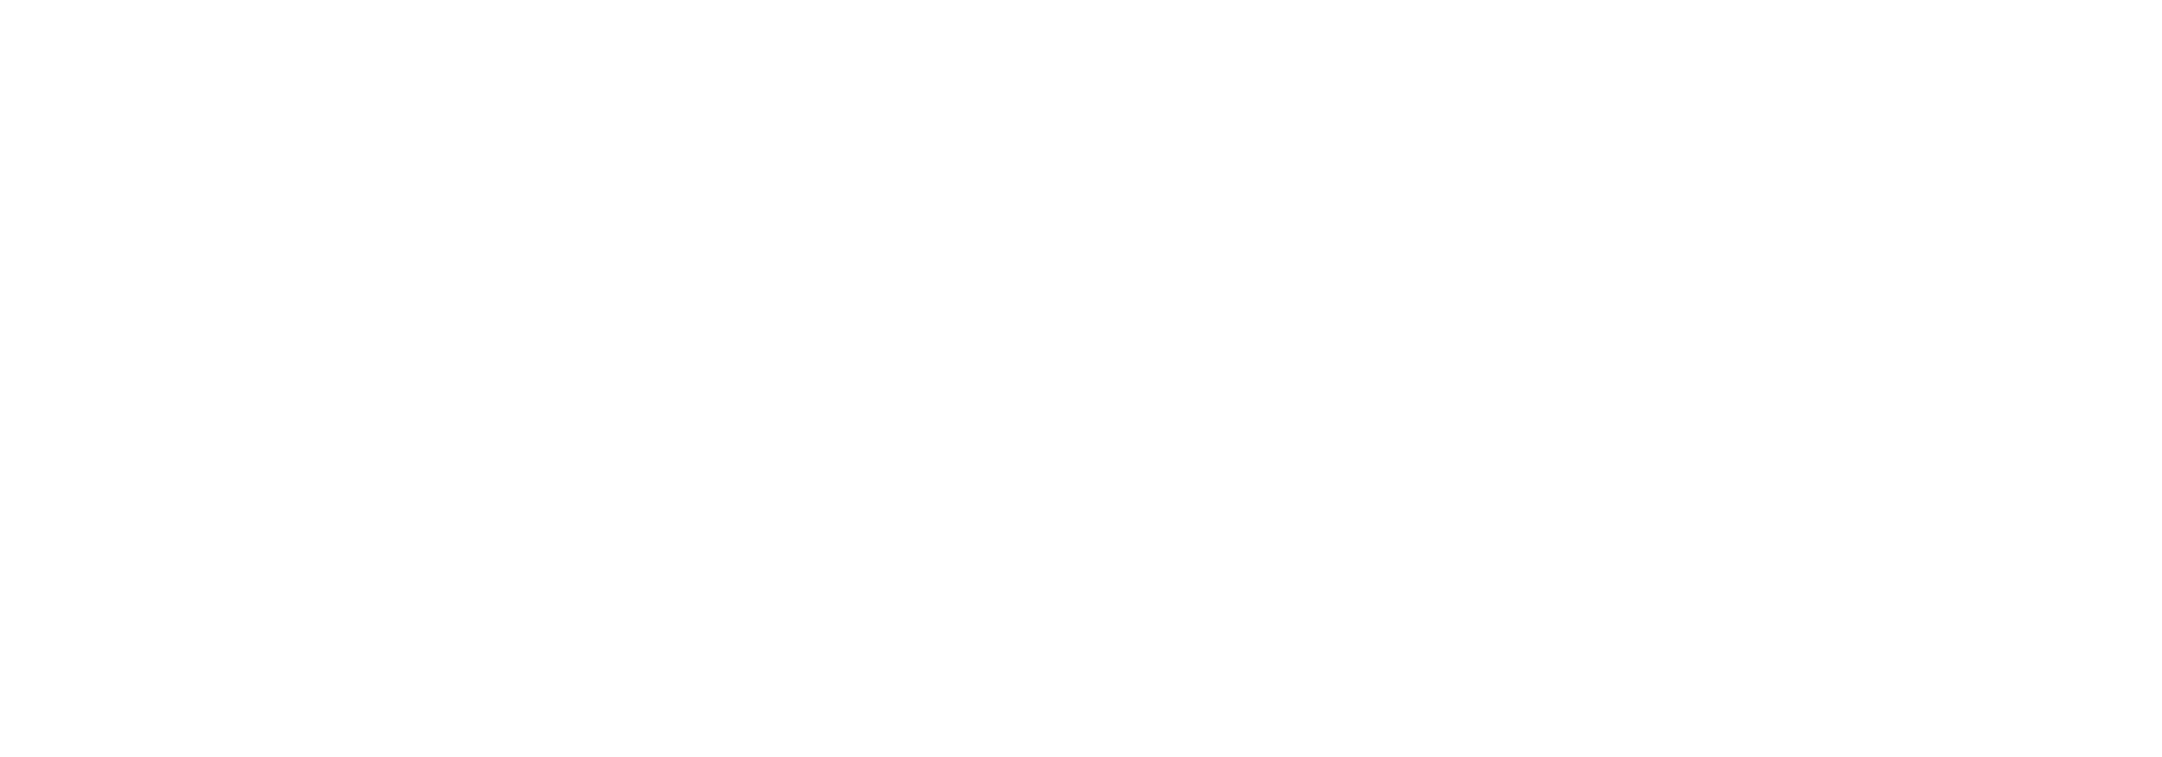 Geneva Peacebuilding Platform Foundation